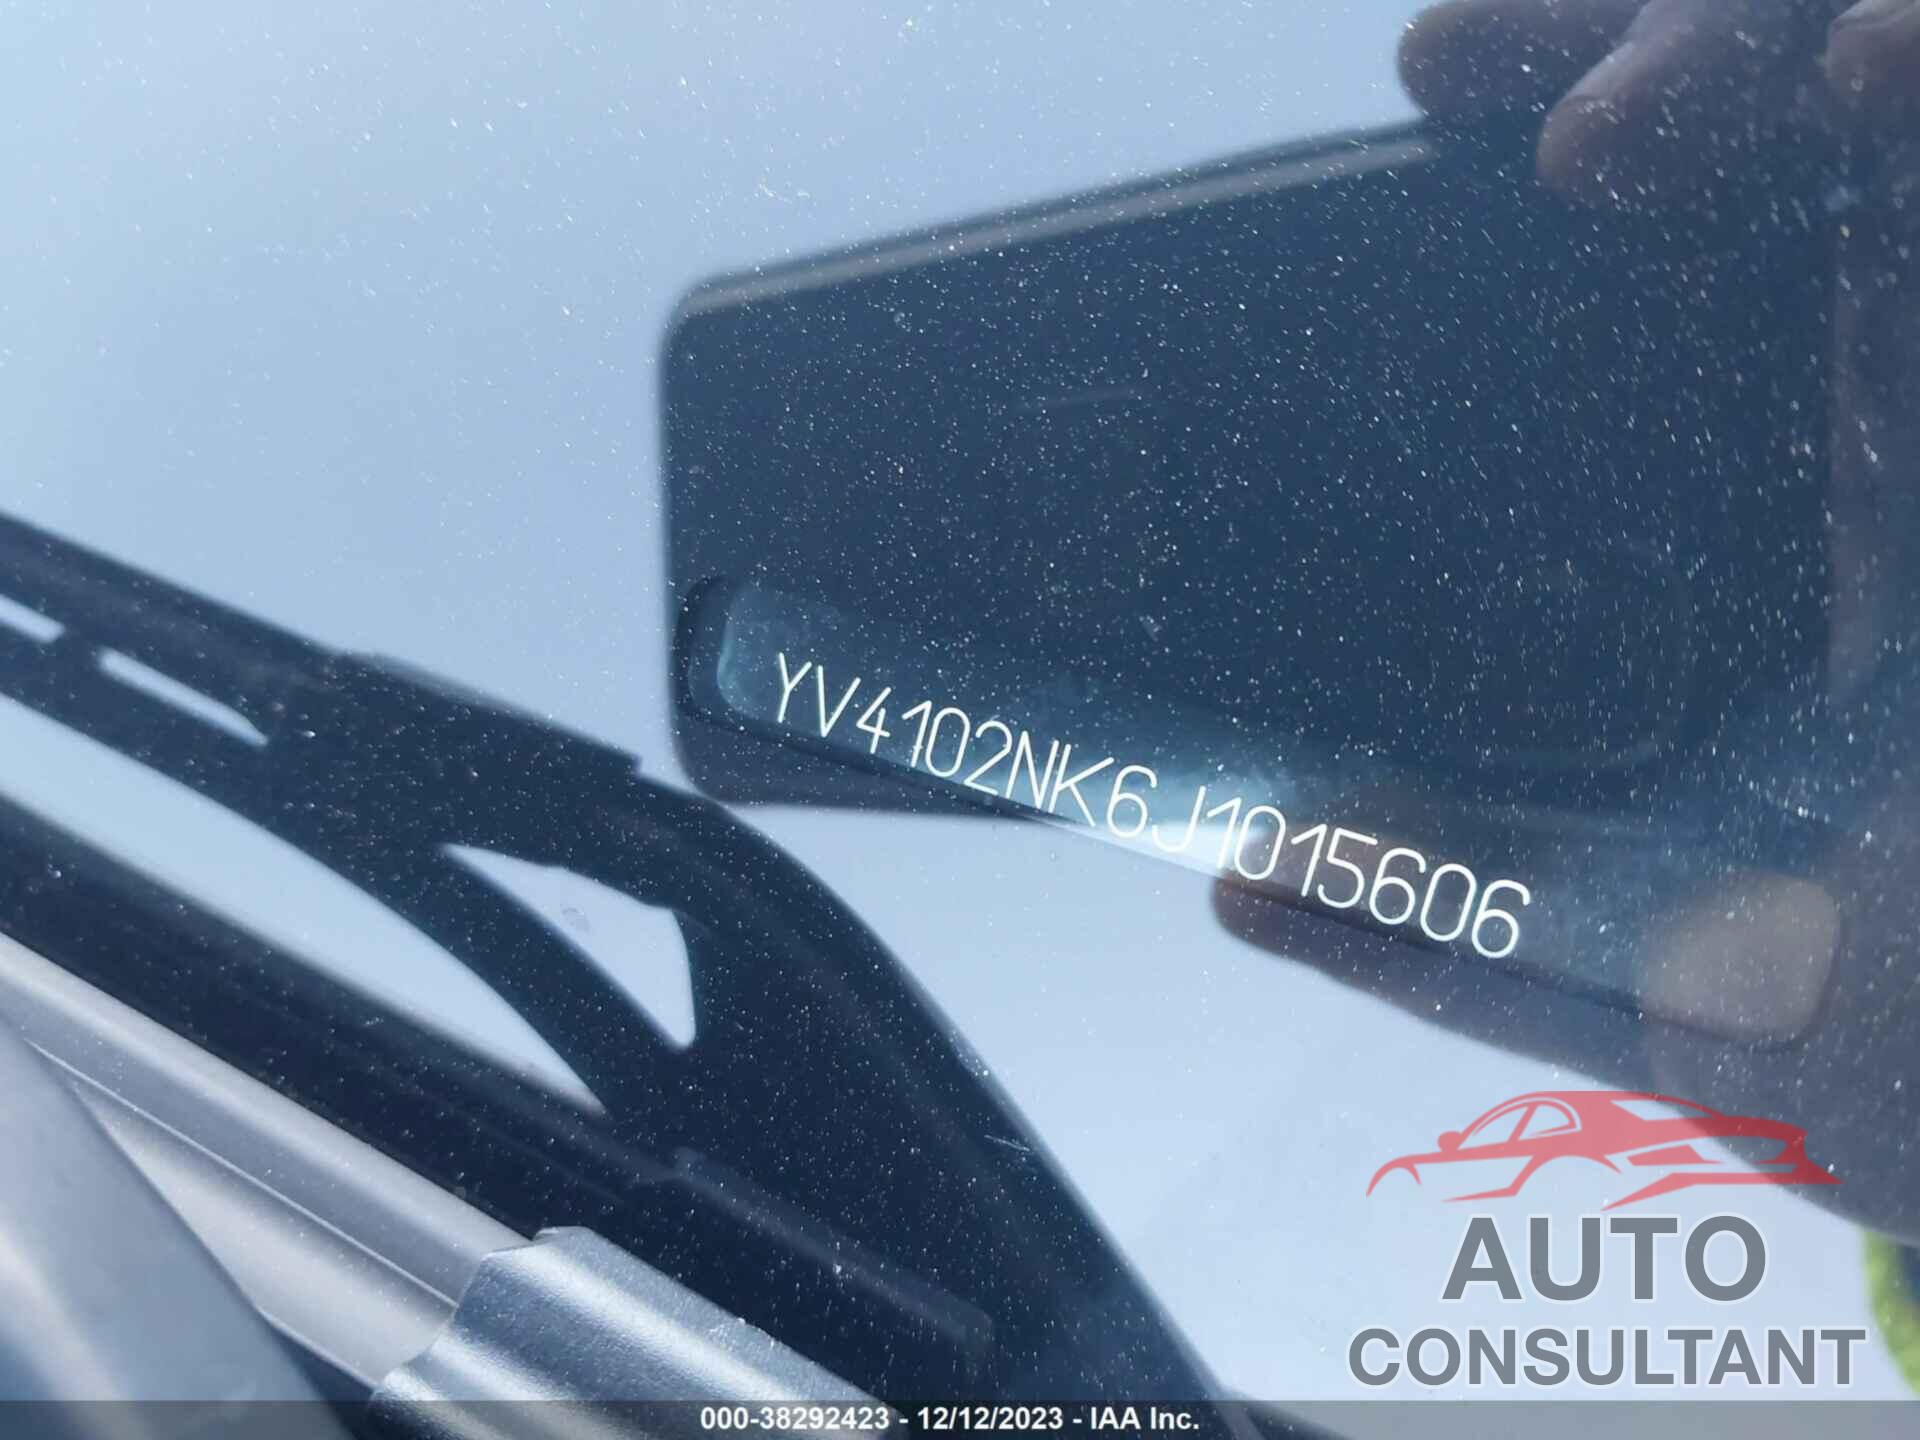 VOLVO V90 CROSS COUNTRY 2018 - YV4102NK6J1015606